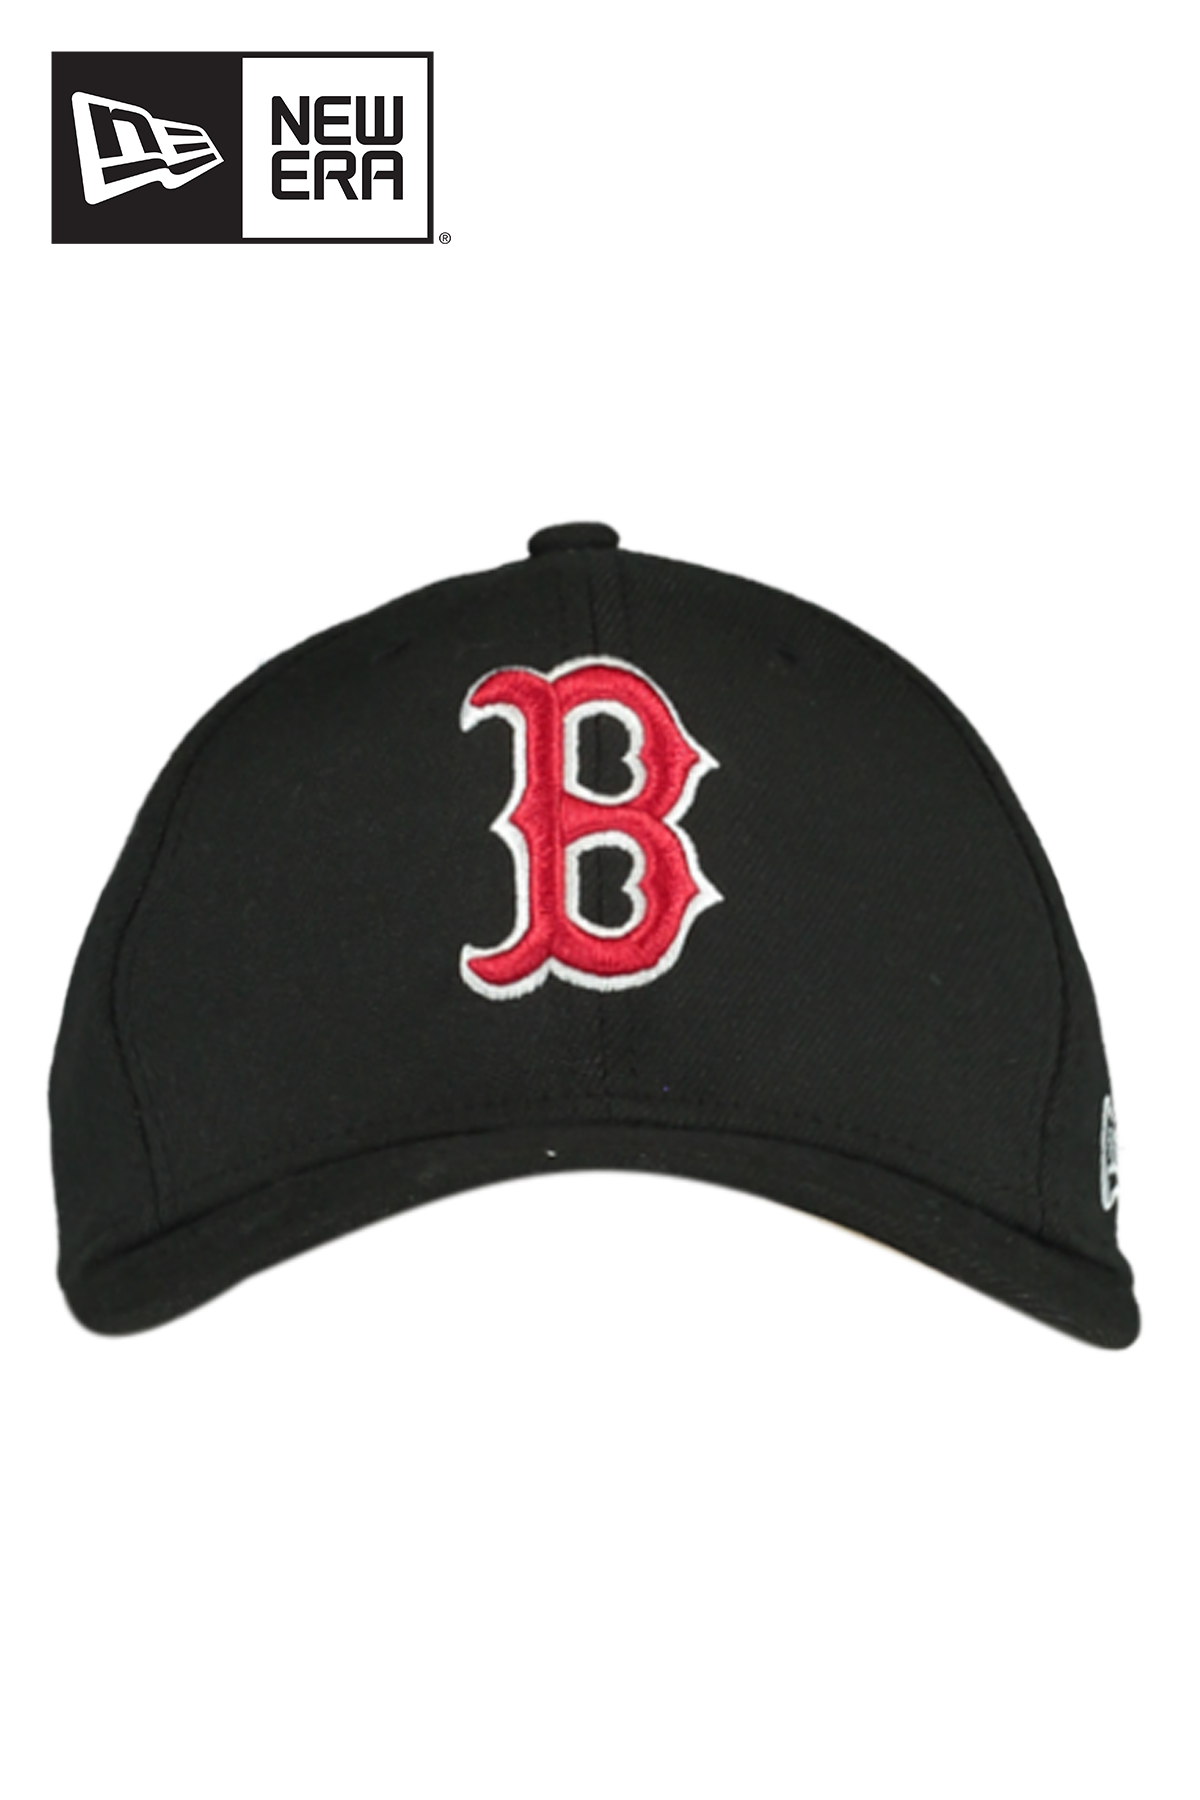 New Era MLB 9FIFTY BOSTON RED SOX